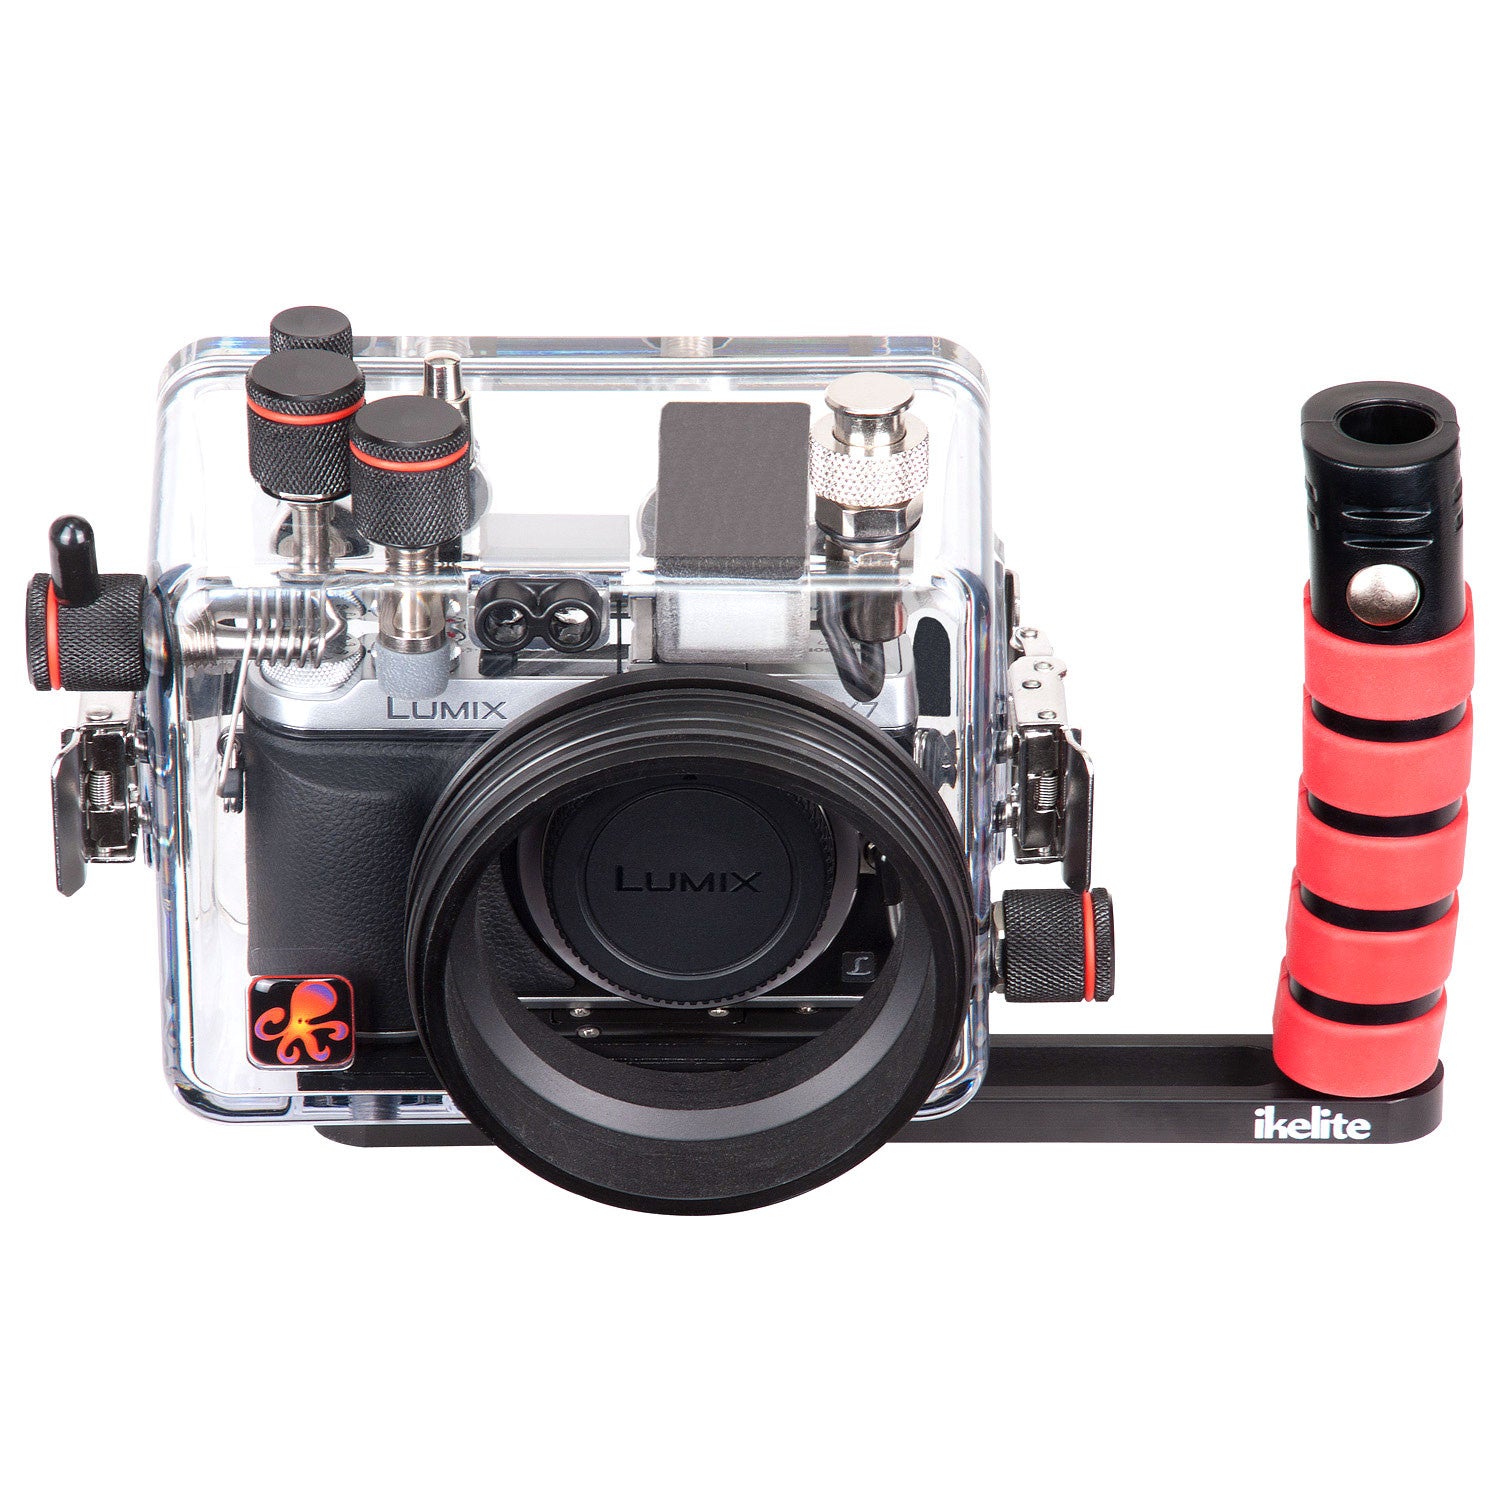 200DLM/A Underwater TTL Housing for Panasonic Lumix GX7 Mirrorless Micro Four Thirds Cameras